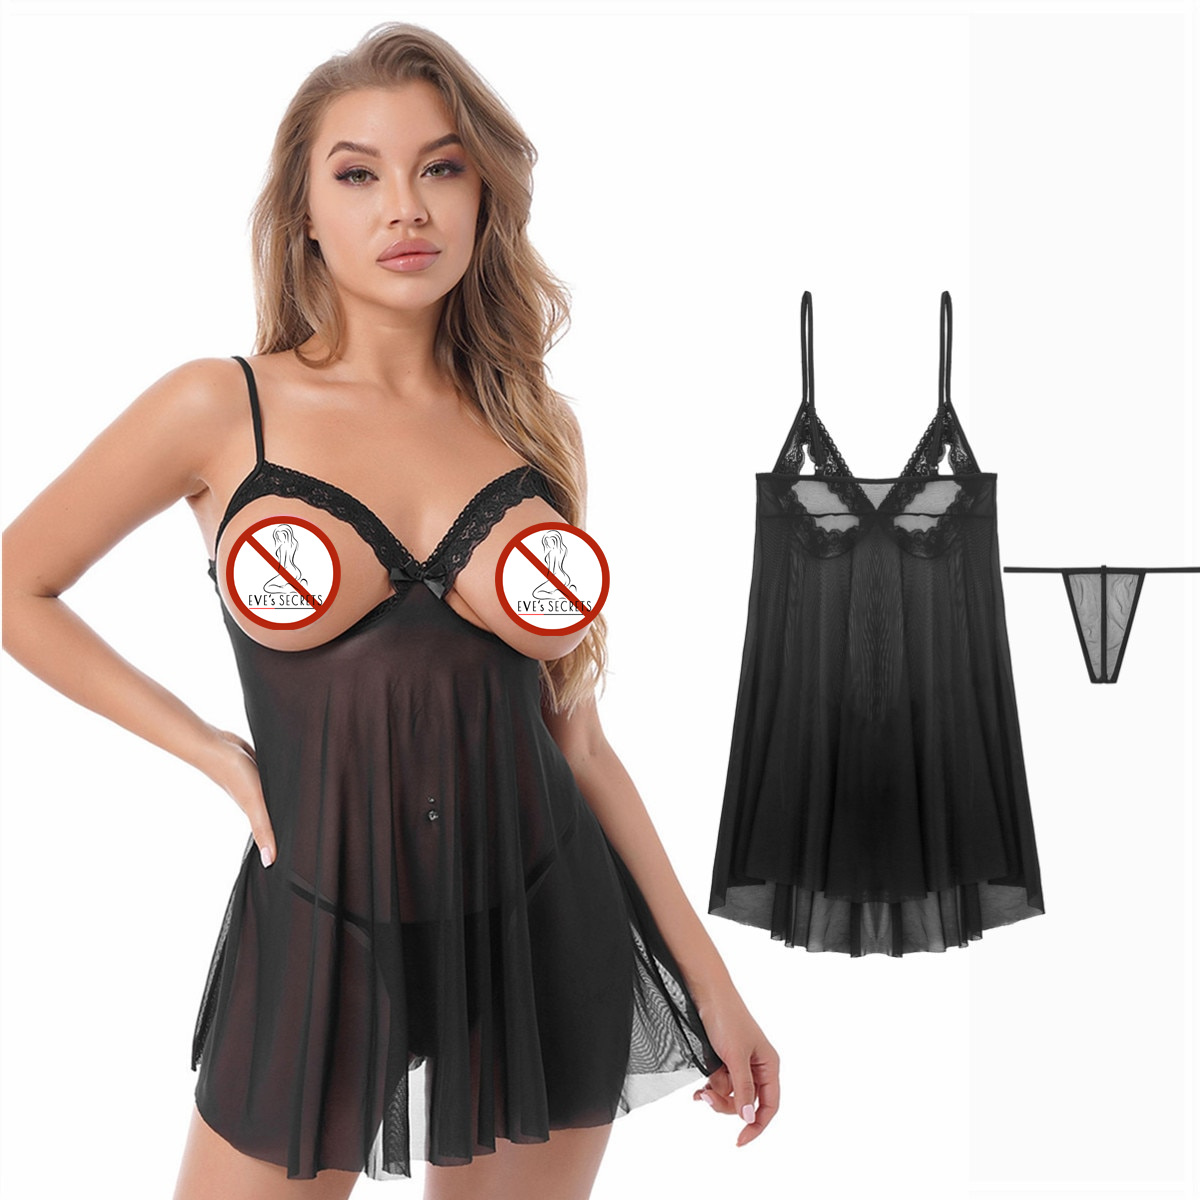 Women's Erotic Sleepwear / Sexy Nightwear with Open Cup / Mesh Lingerie with G-string - EVE's SECRETS